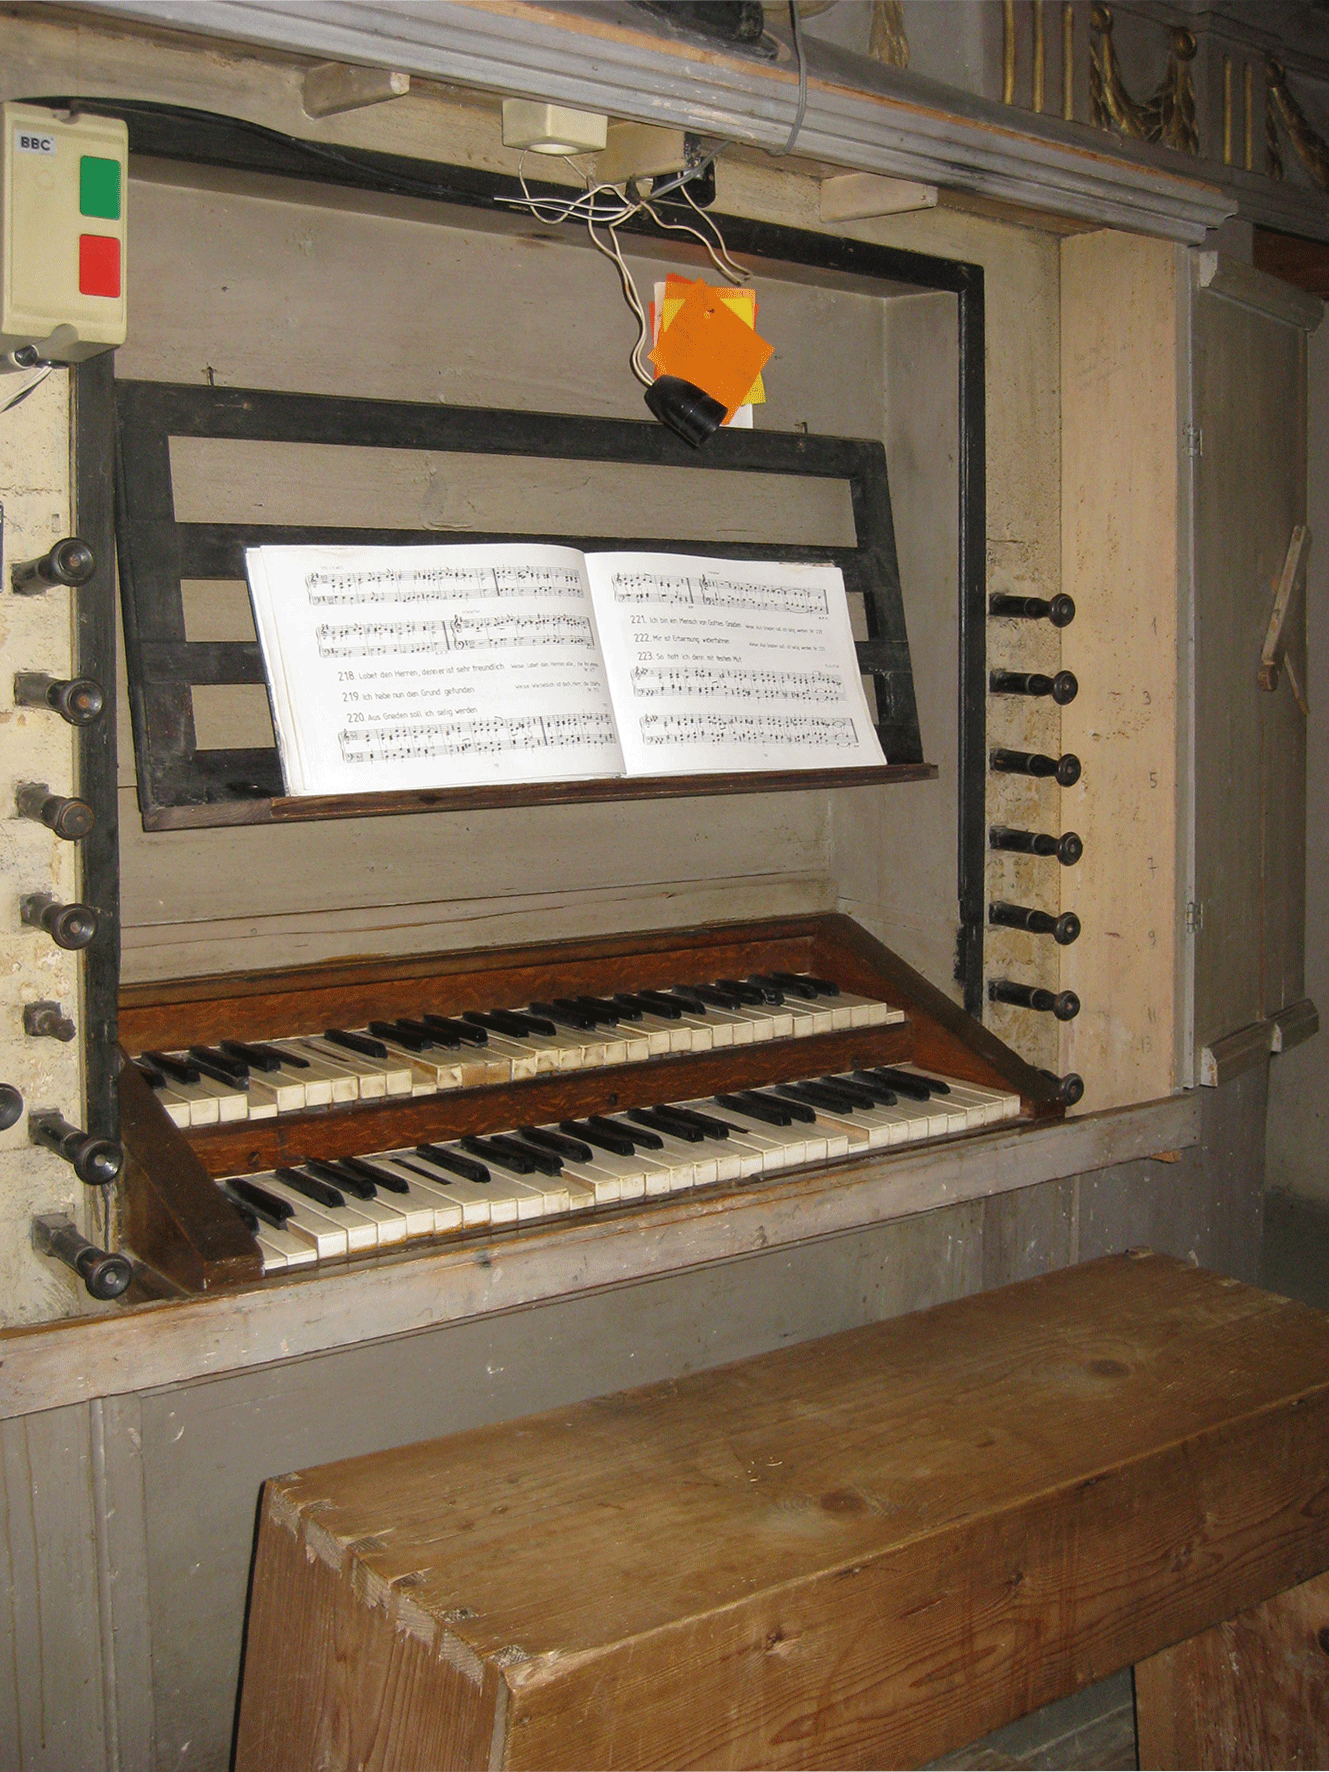 Orgel Manuale